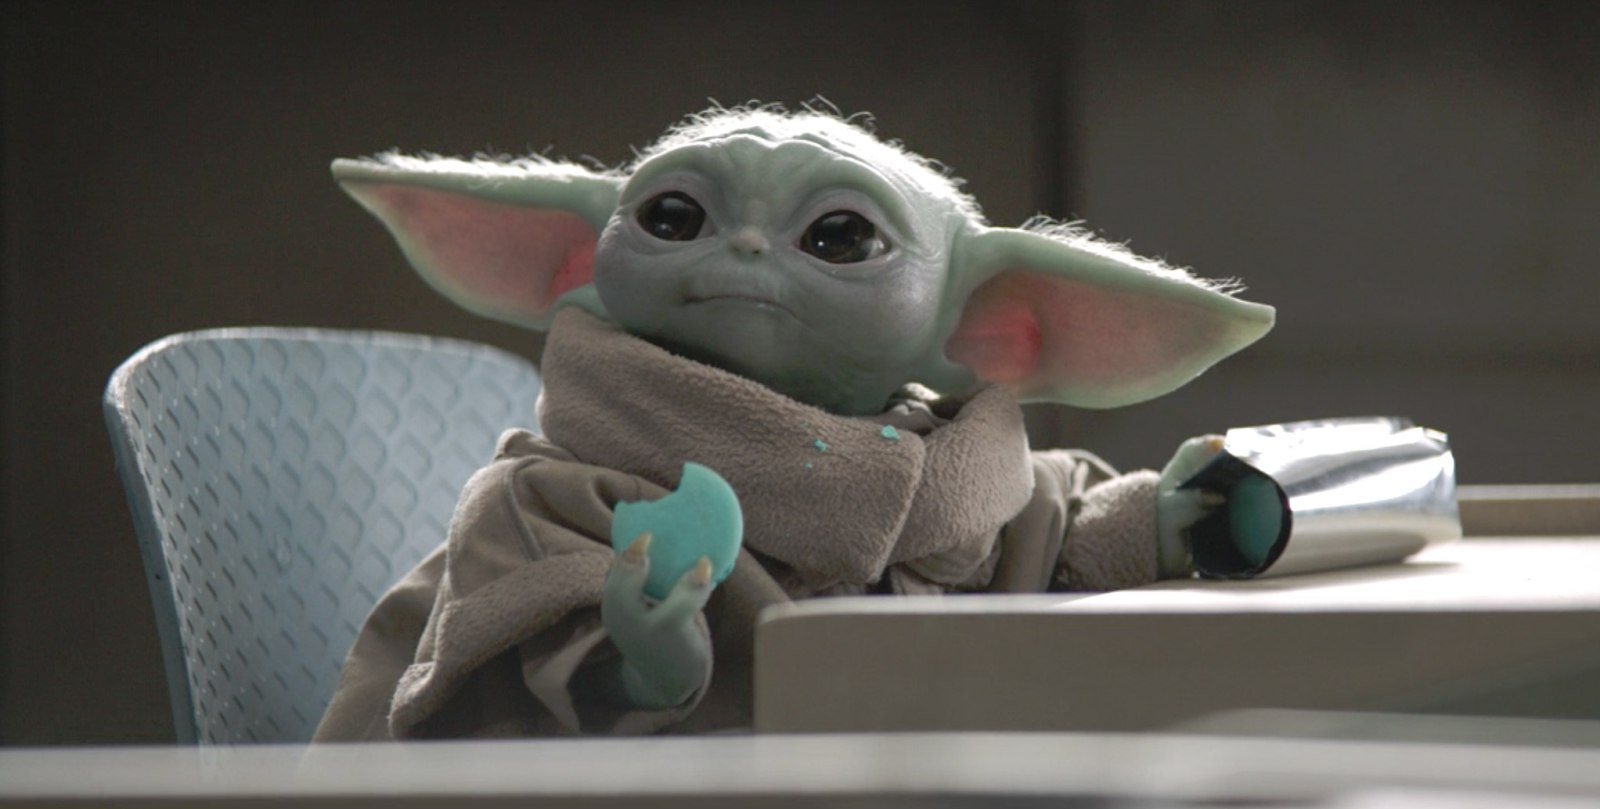 The Child a.k.a Baby Yoda a.k.a [REDACTED SPOILER] in Season 2 of The Mandalorian